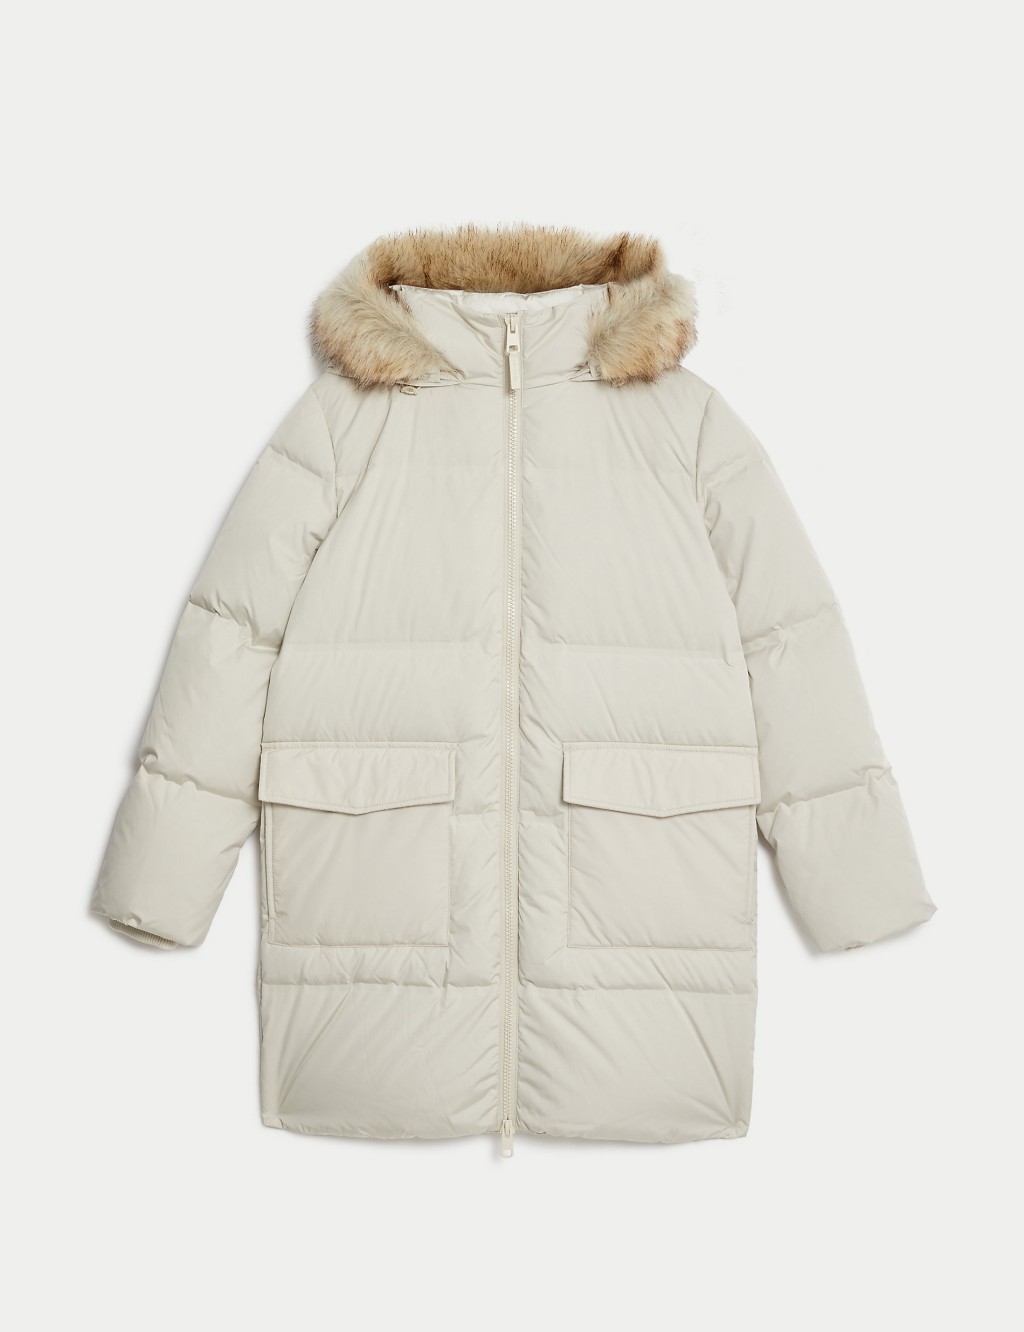 Stormwear™羽绒大衣/$1,790/MS，现于马莎选购外套享75折，折后买满$1,200，再有88折。